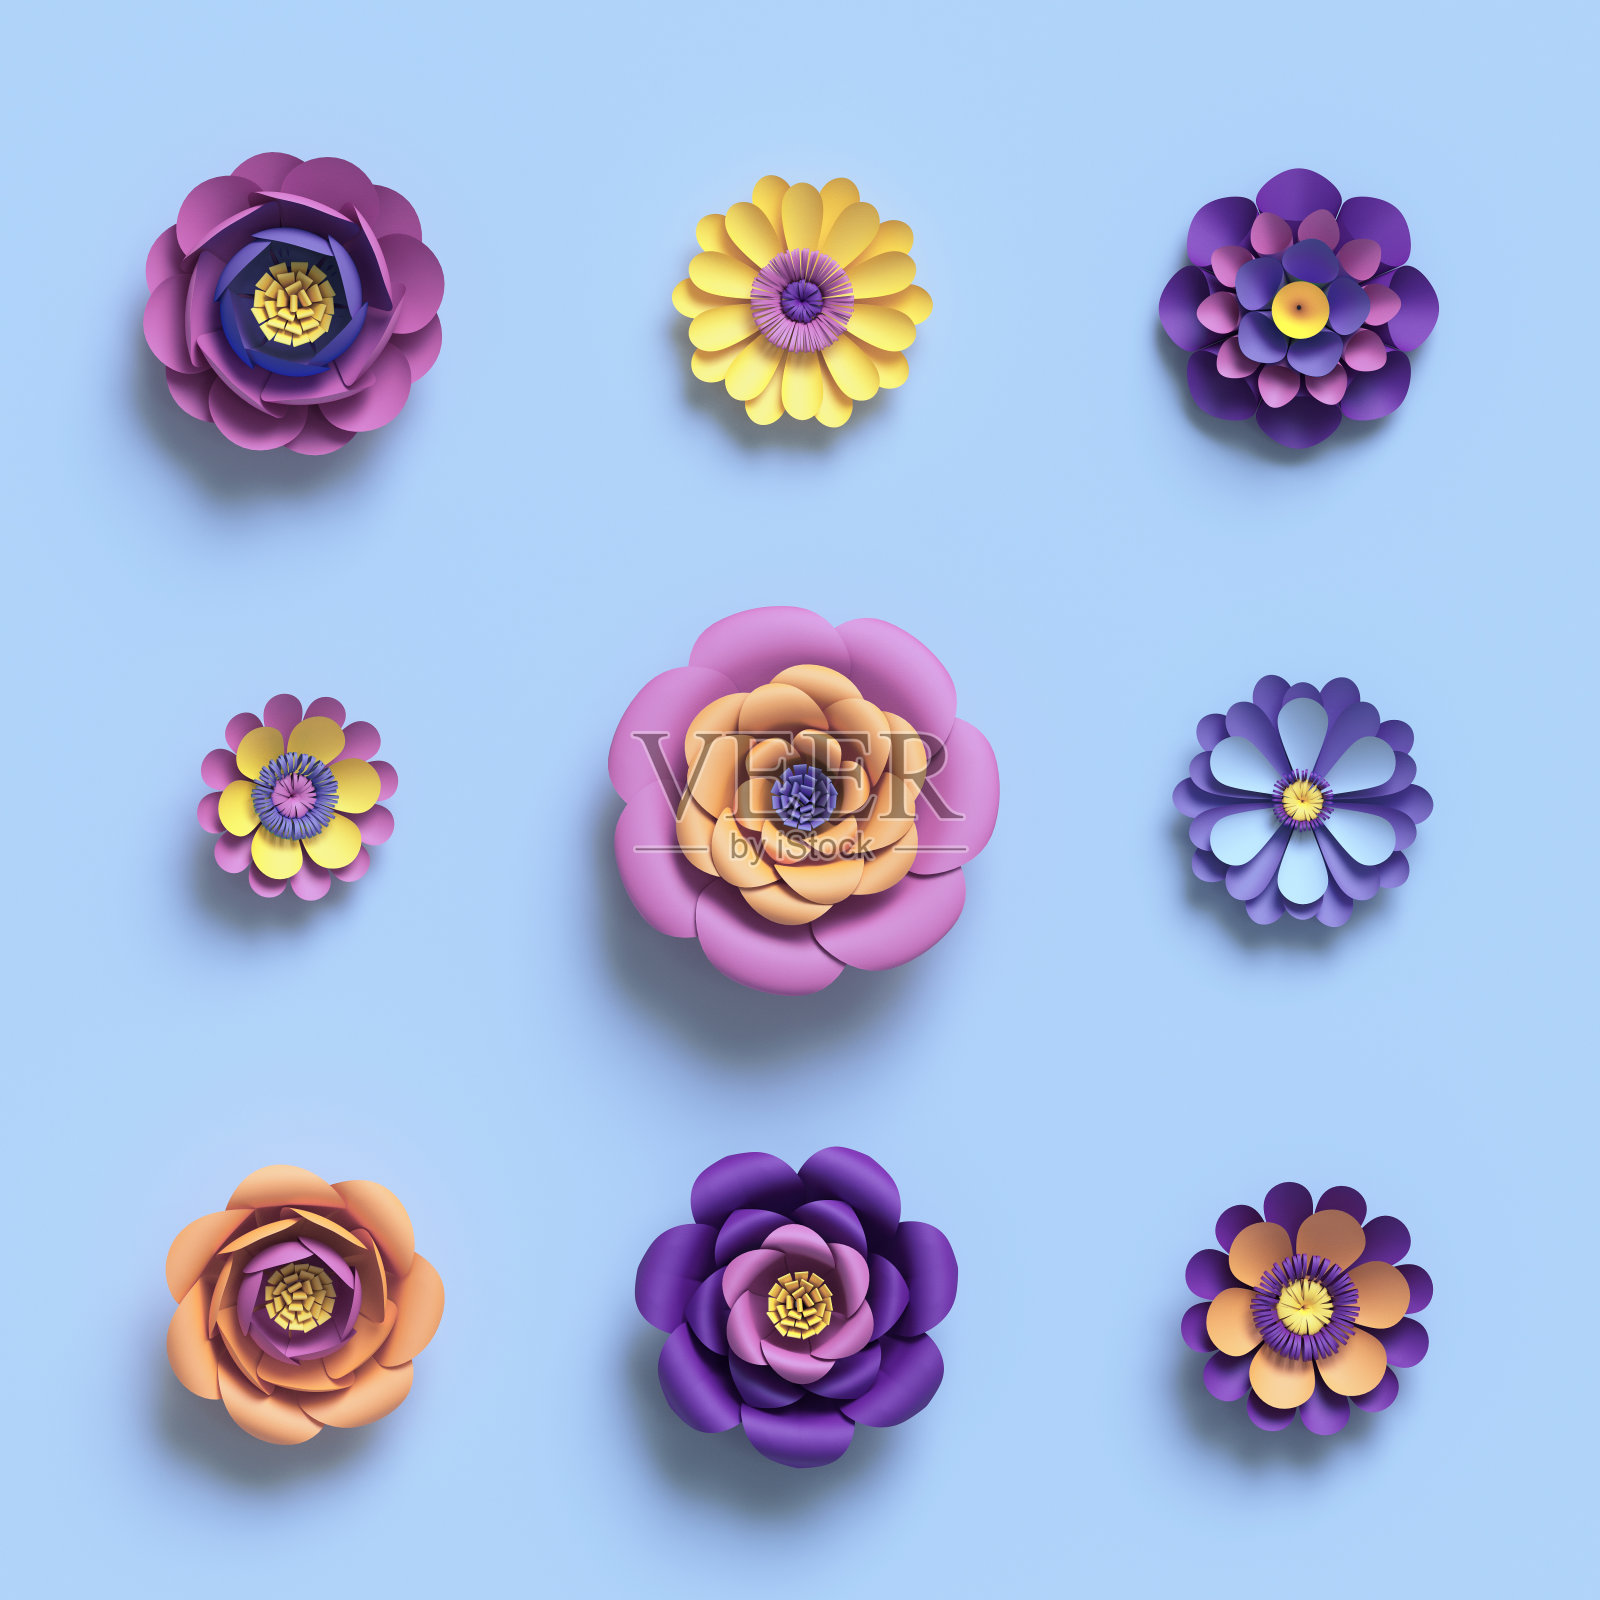 3d渲染，纸艺术，装饰花，花卉背景，植物图案，粉彩糖果颜色，充满活力的调色板，孤立的设计元素插画图片素材